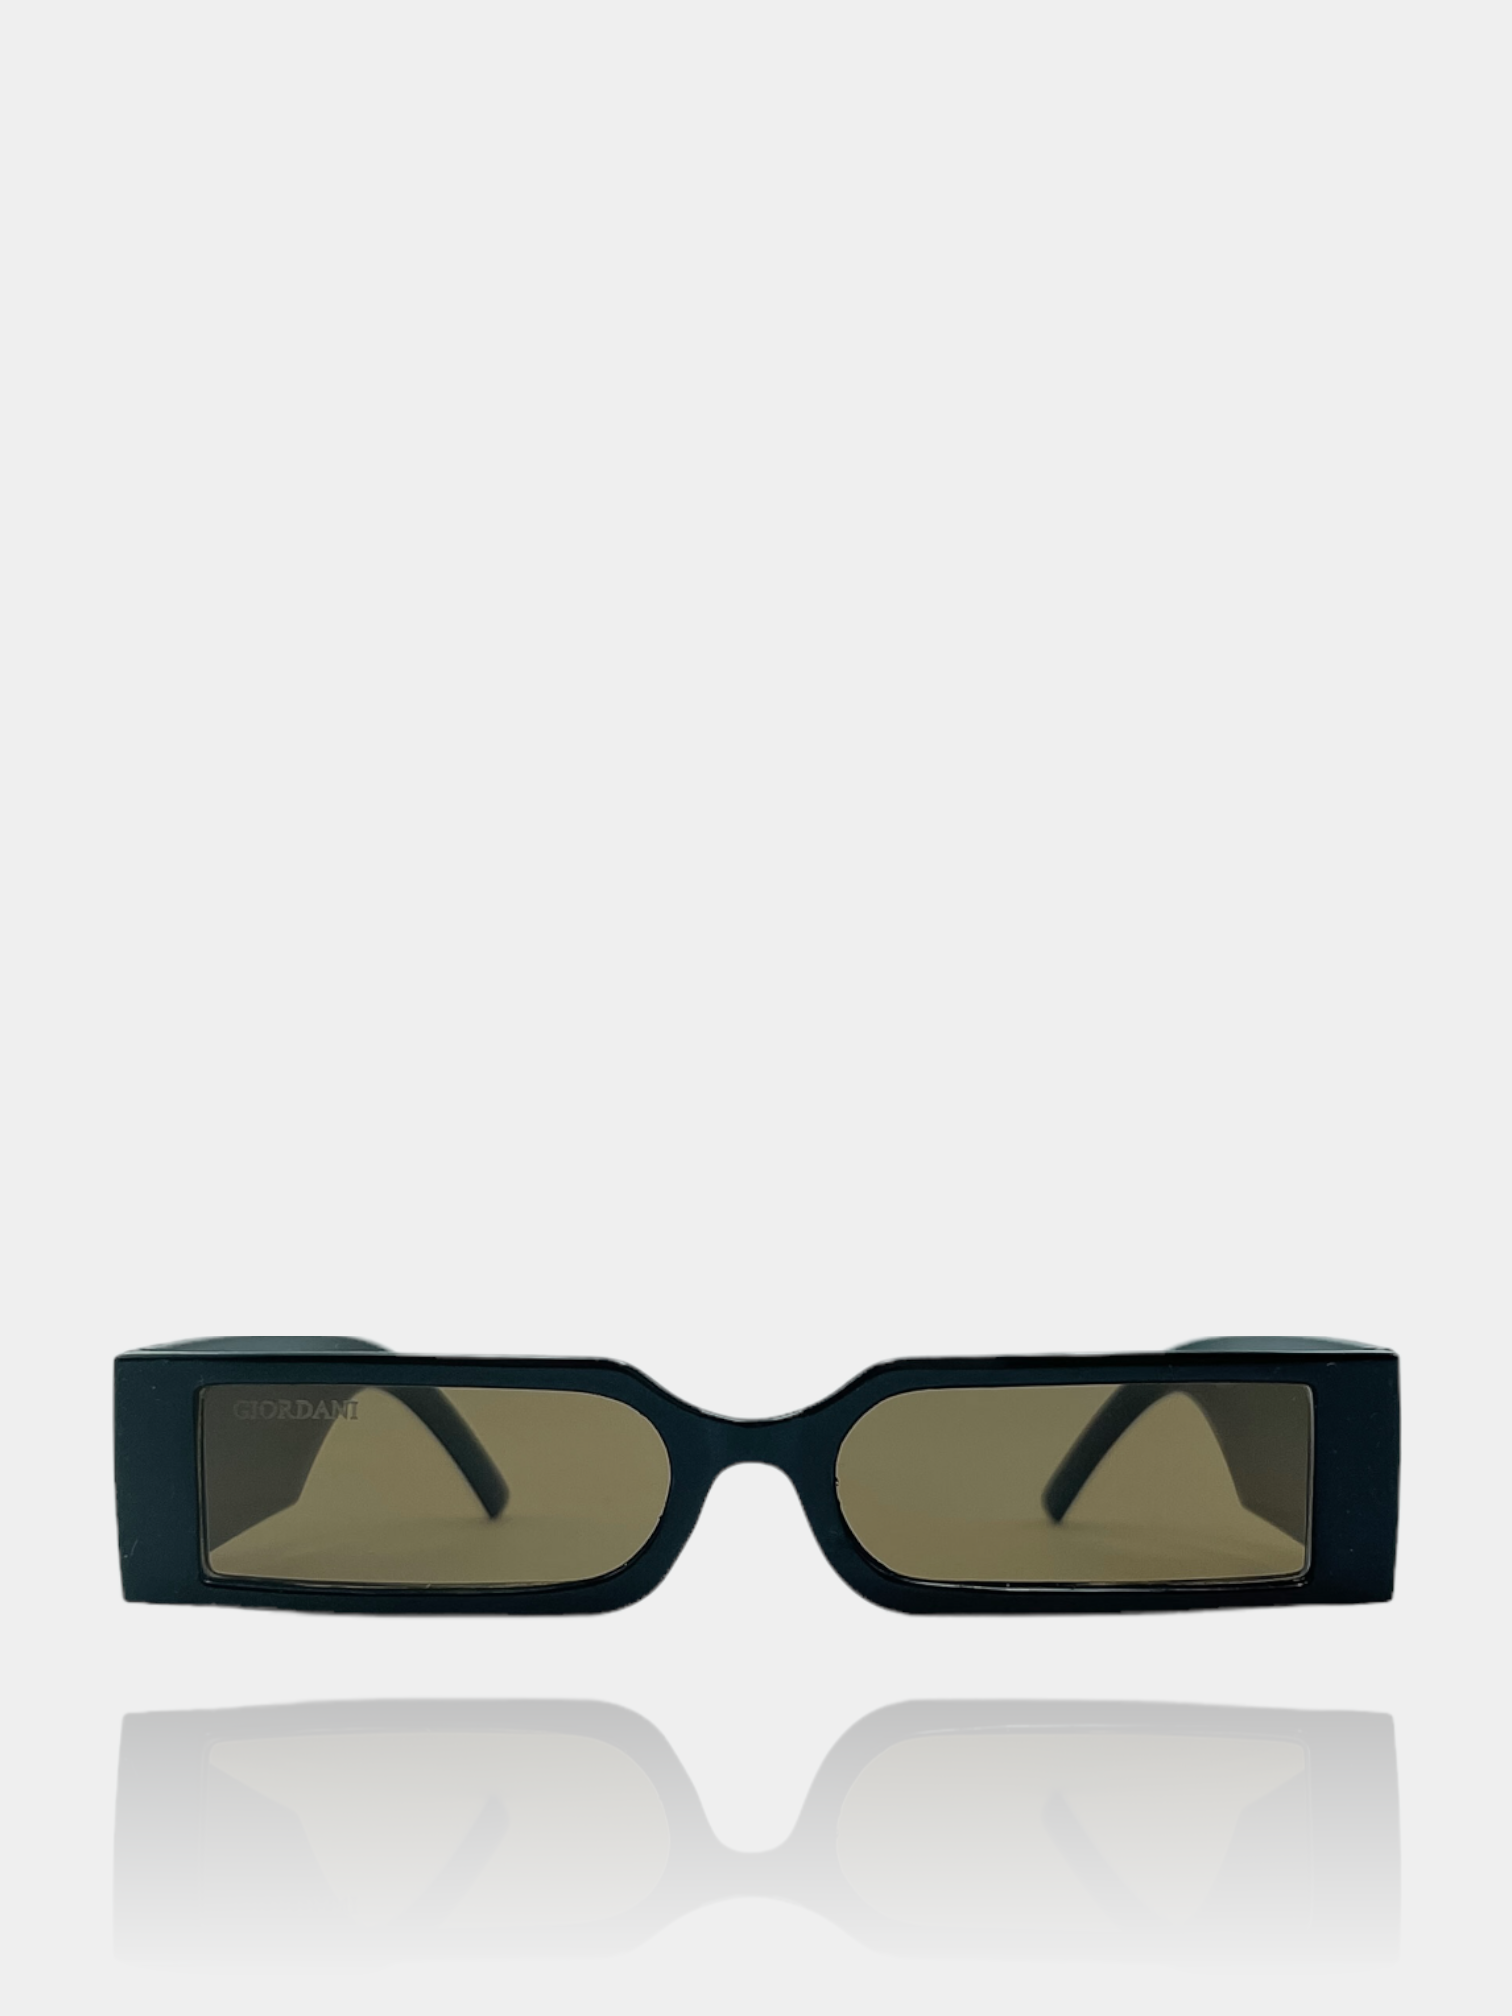 Sunglasses Austin